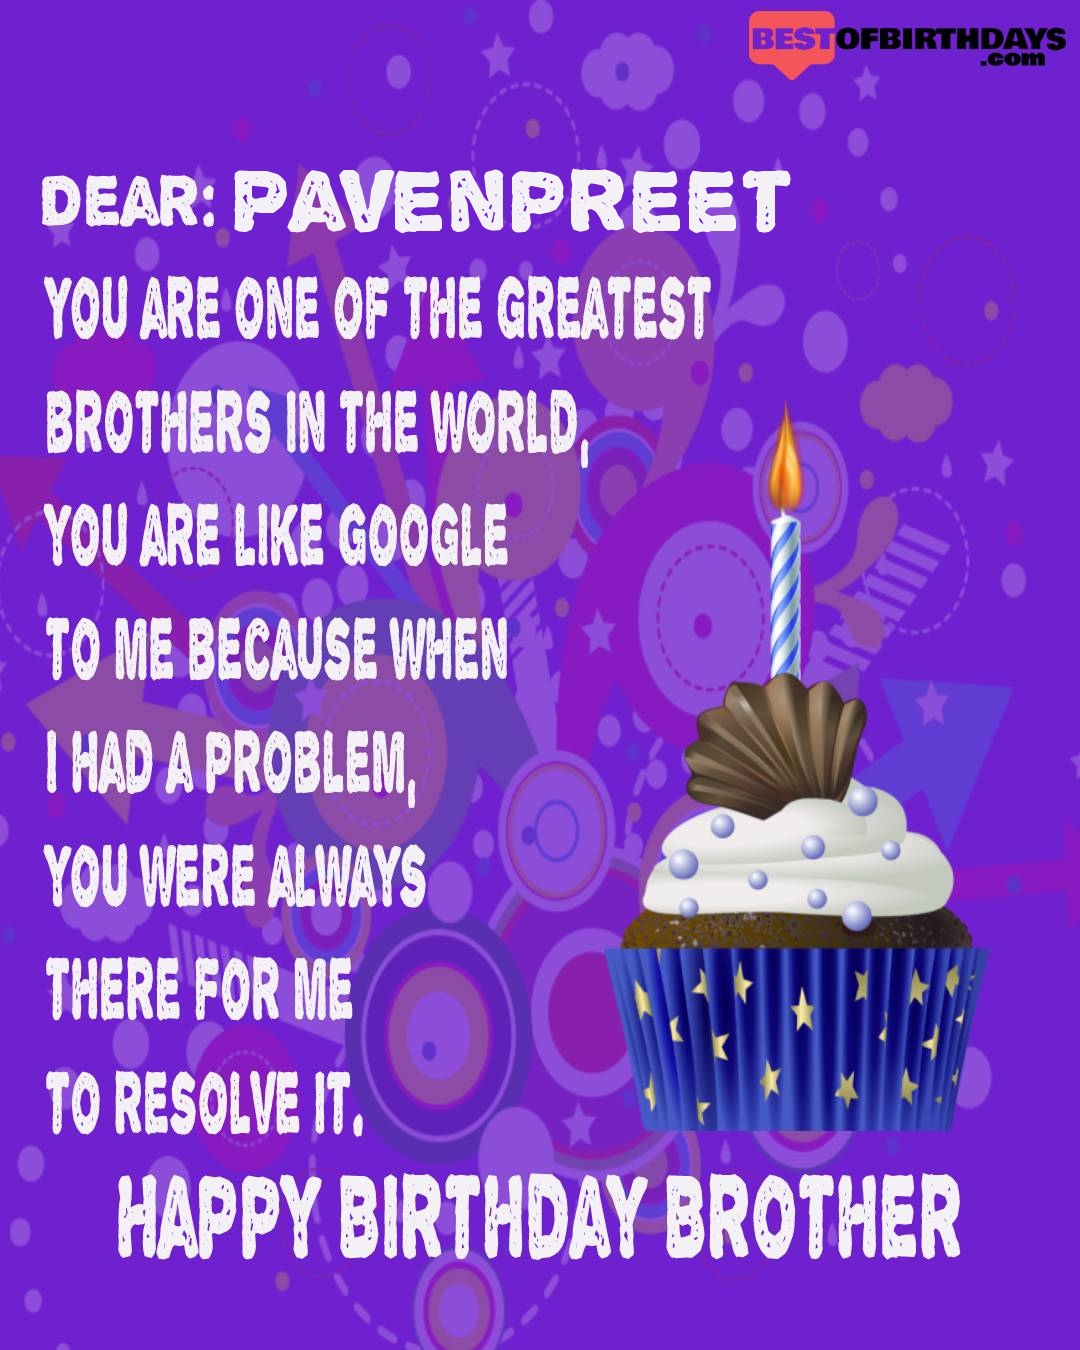 Happy birthday pavenpreet bhai brother bro